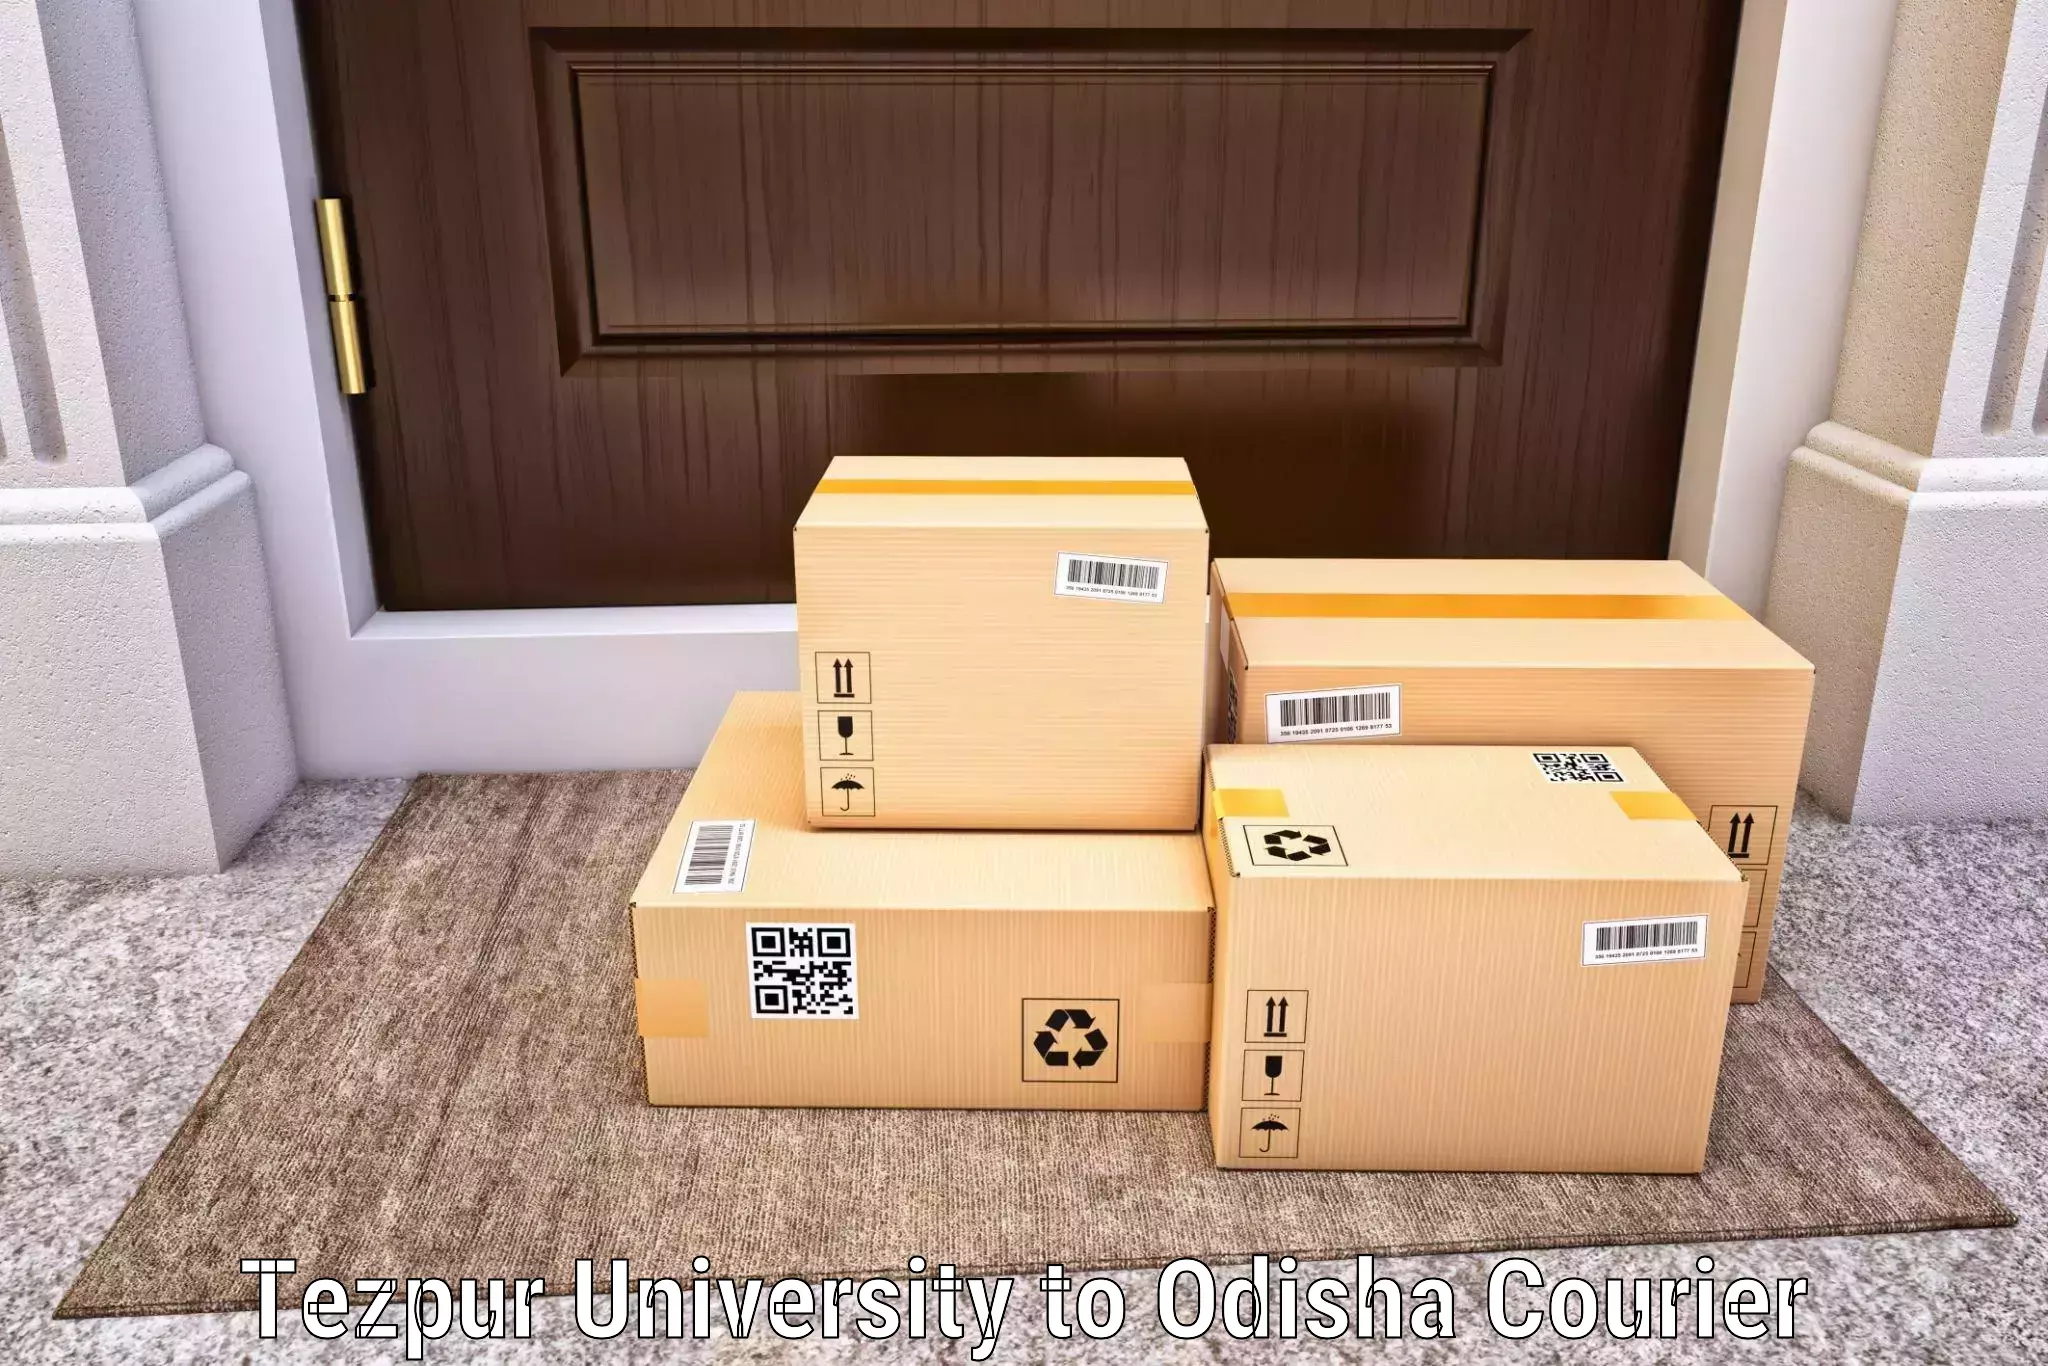 Speedy delivery service Tezpur University to Odisha